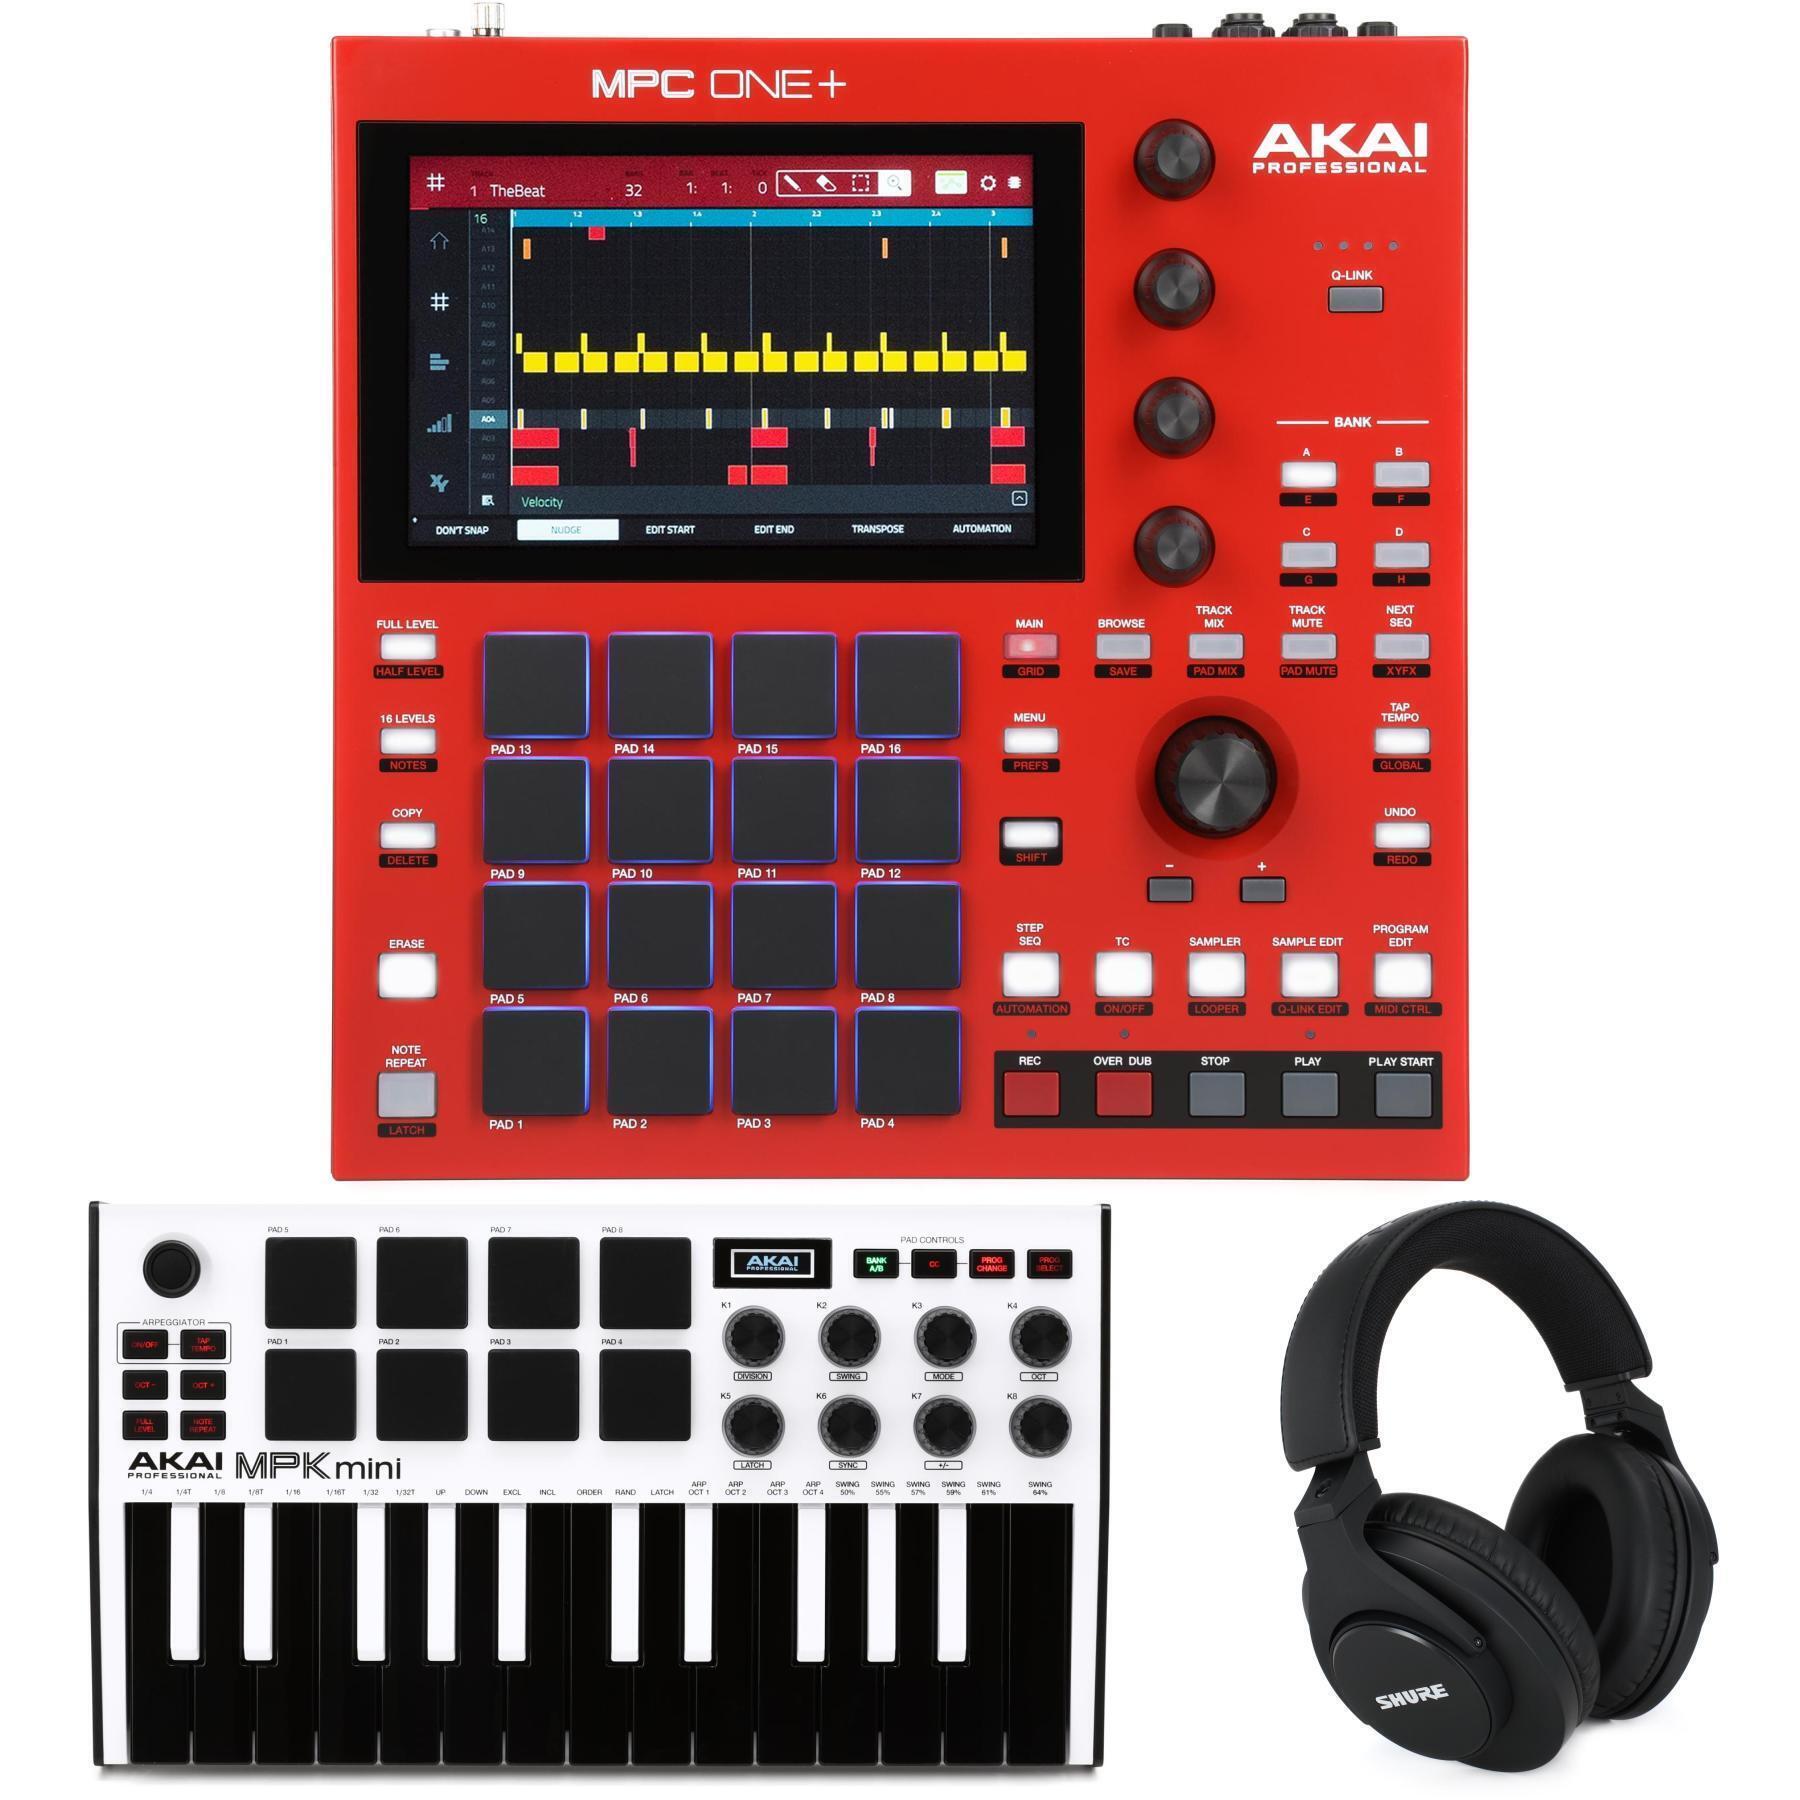 Akai Professional MPK Mini Plus - USB MIDI Keyboard Controller with 37 Mini  Keys, 8 MPC Pads, Sequencer, MIDI/CV/Gate I/O, Music Production Software